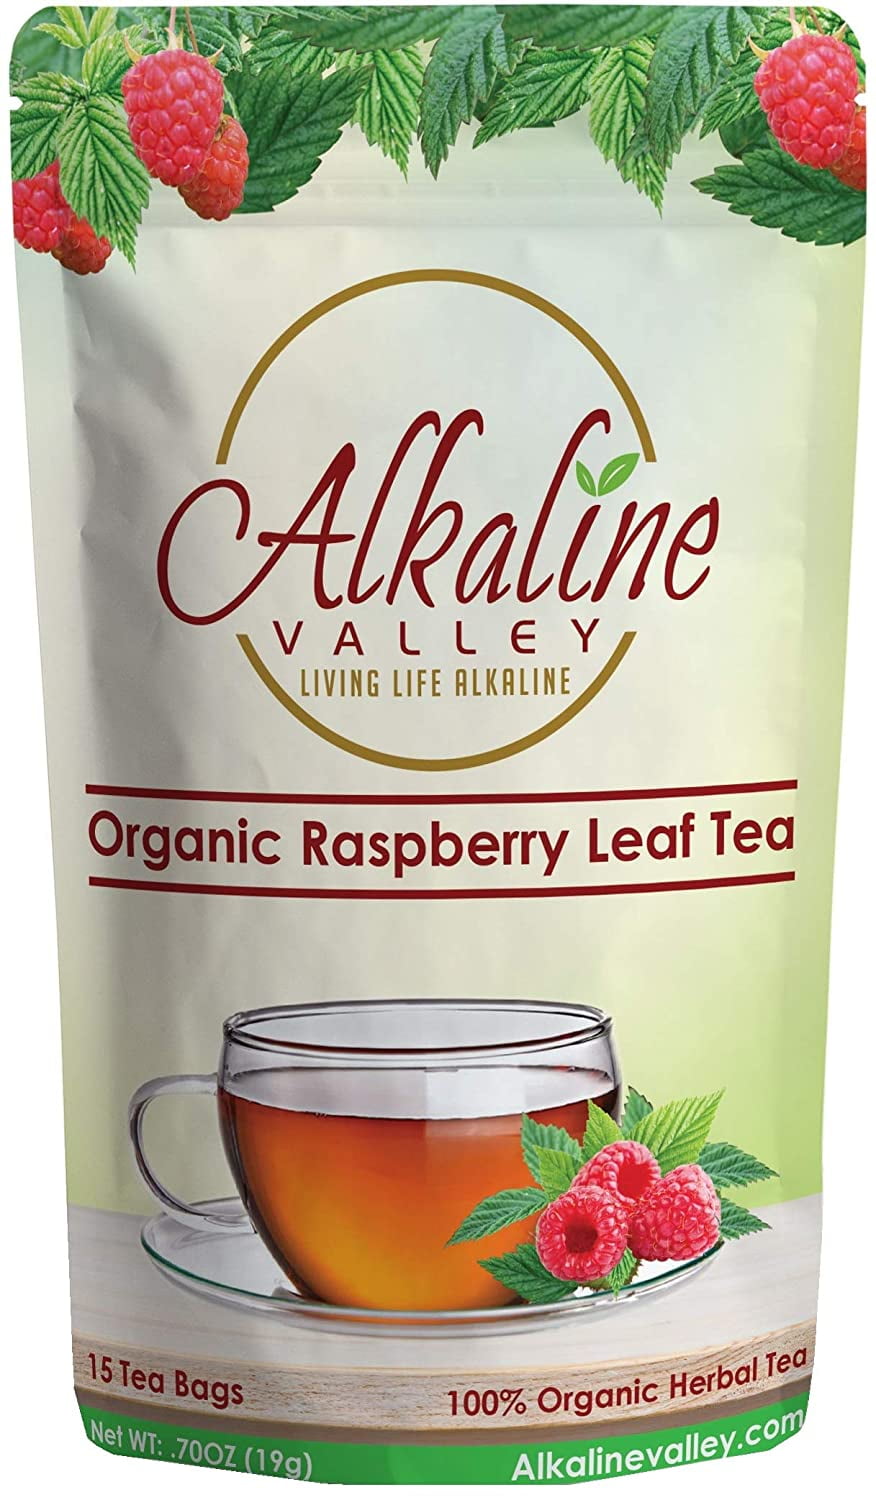 Stillehavsøer Ordsprog slap af Red Raspberry Leaf Tea - 100% Alkaline and Organic - 15  Unbleached/Chemical-Free Tea Bags - Caffeine-Free, No GMO - Walmart.com